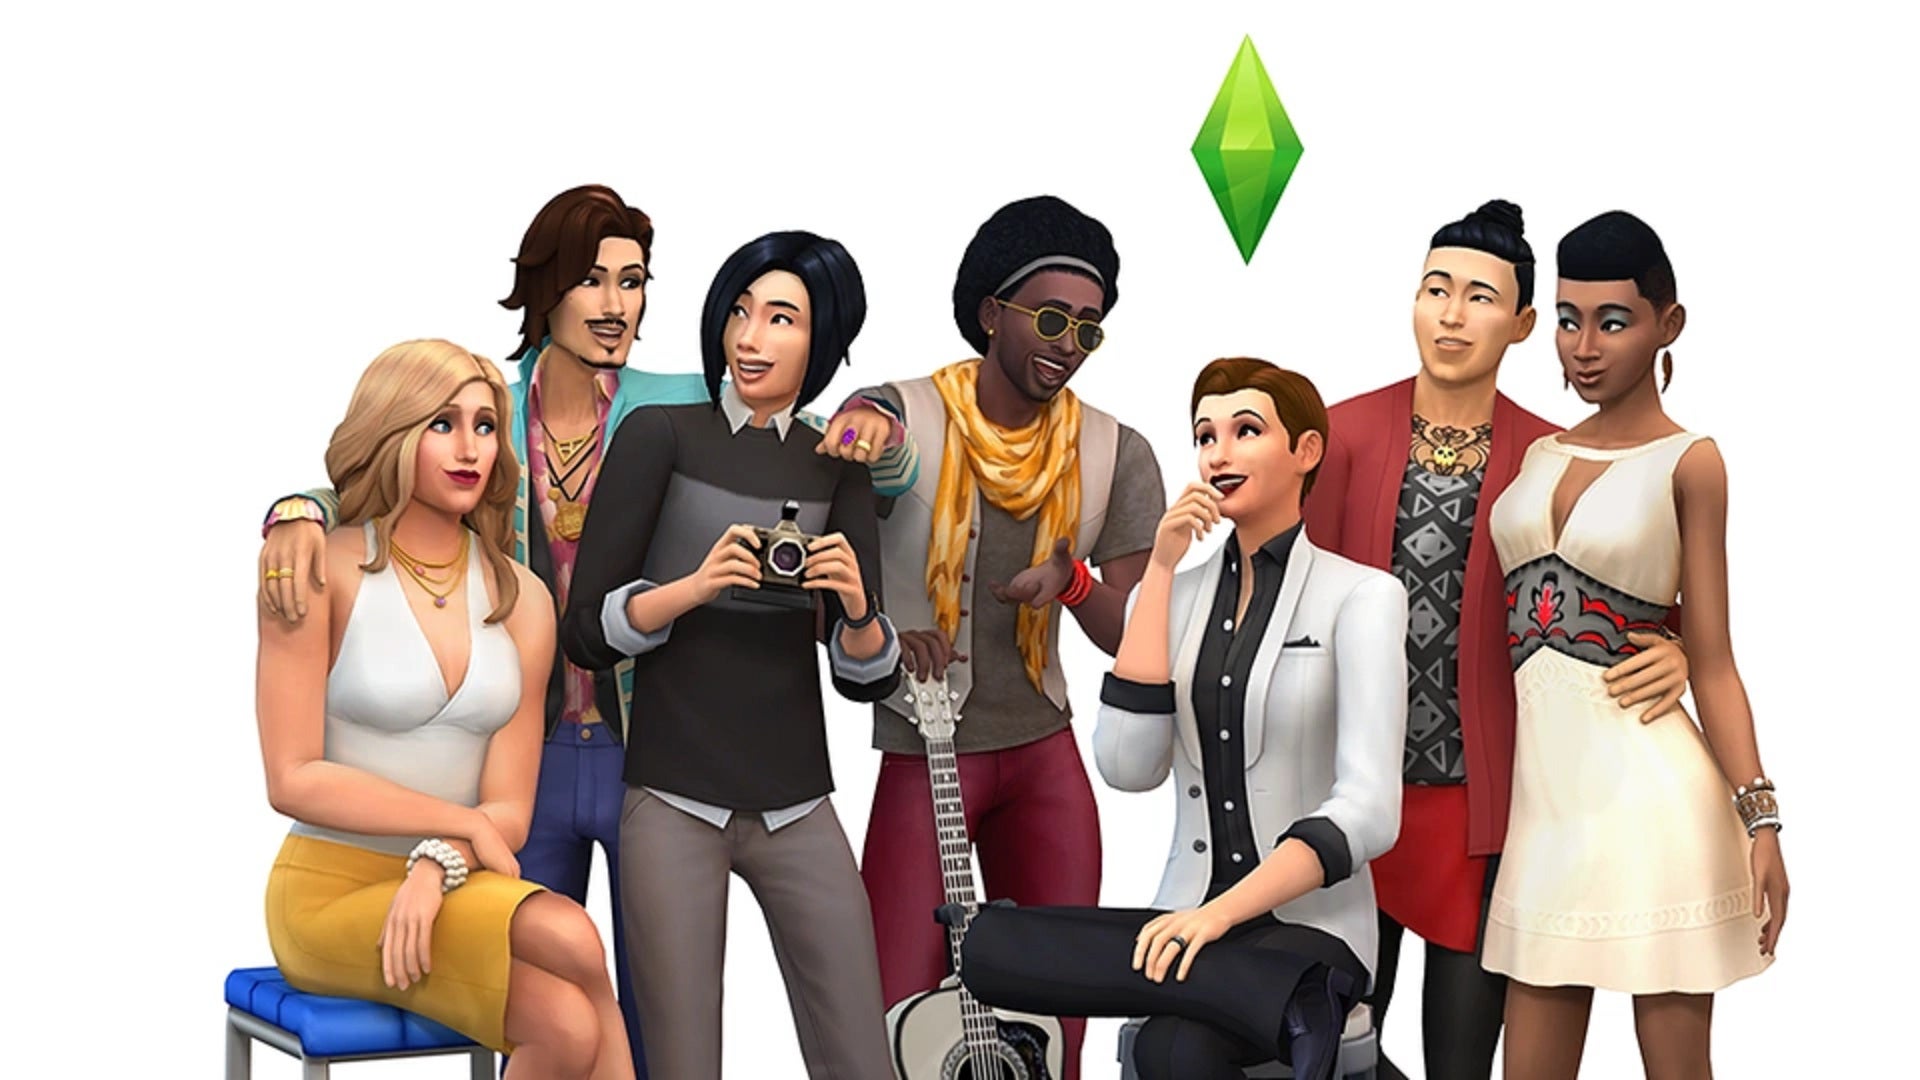 The Sims 4 gender and sexual orientation customisation | Rock Paper Shotgun